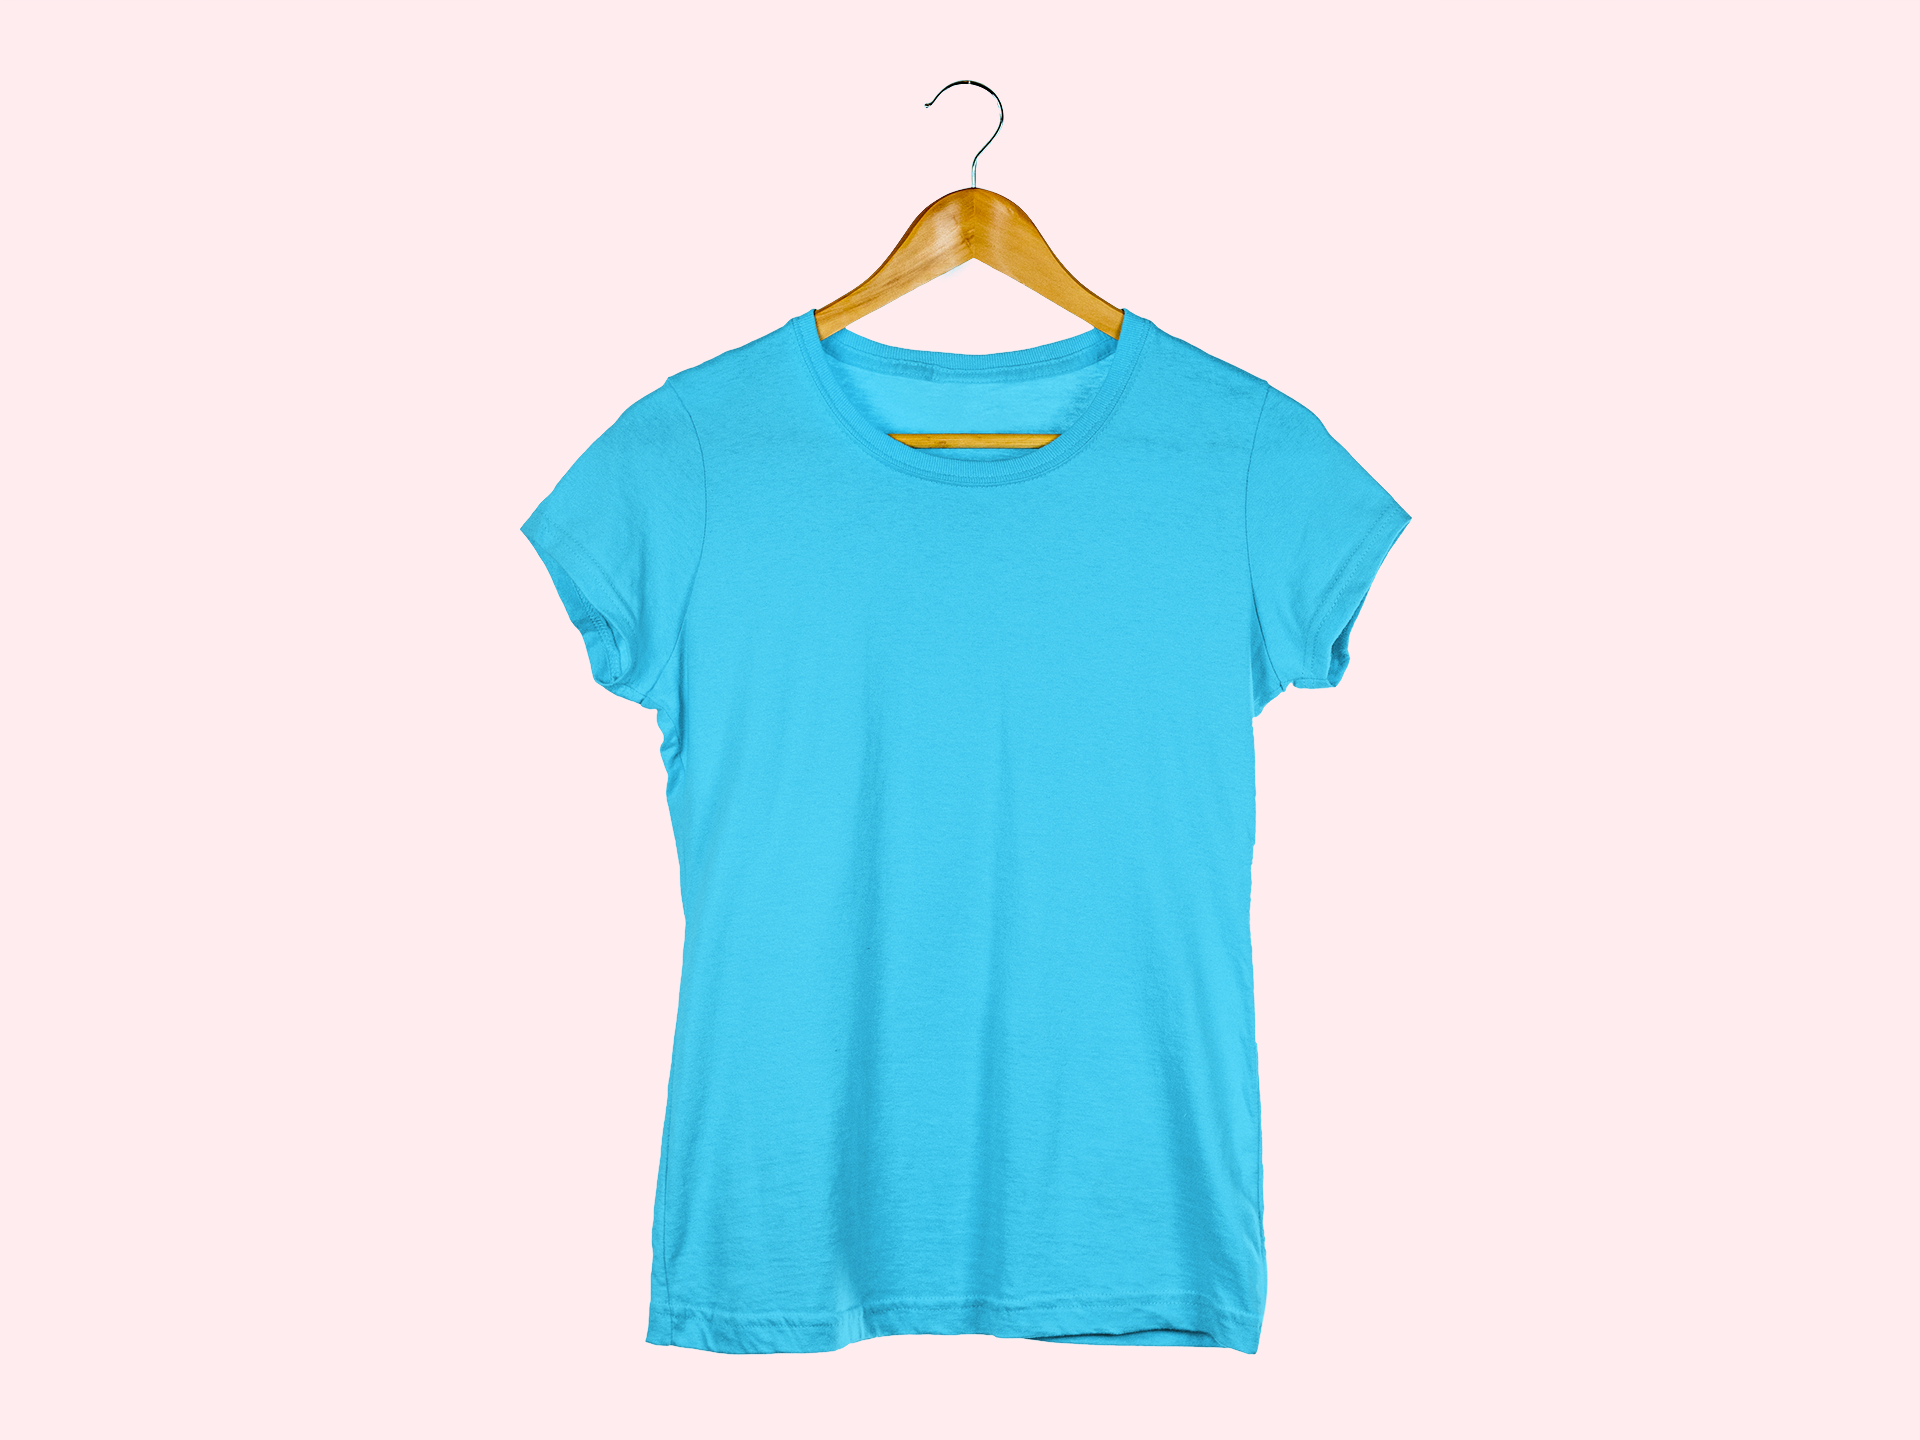 Classic Women's Round-Neck Plain Cotton T-Shirts - Essential Wardrobe Staples